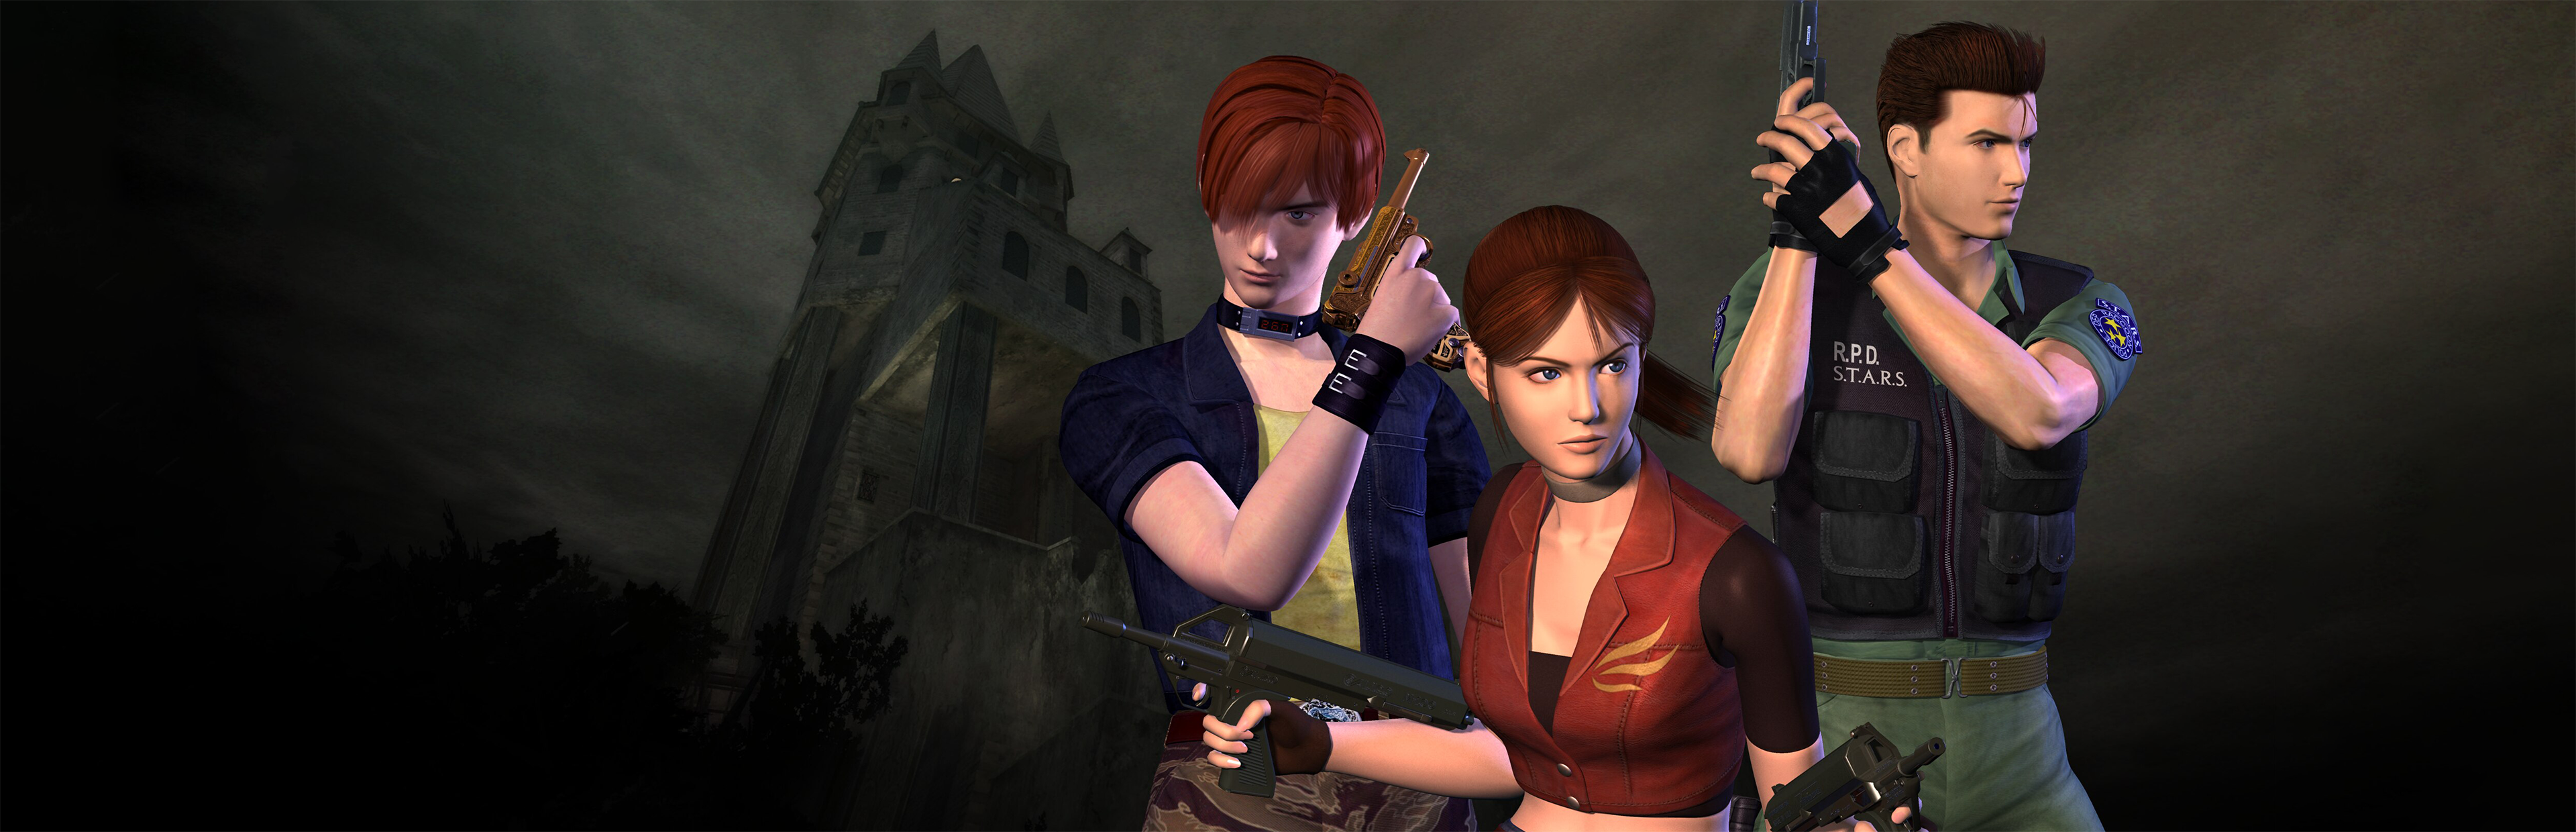 Resident Evil - Code: Veronica - SteamGridDB